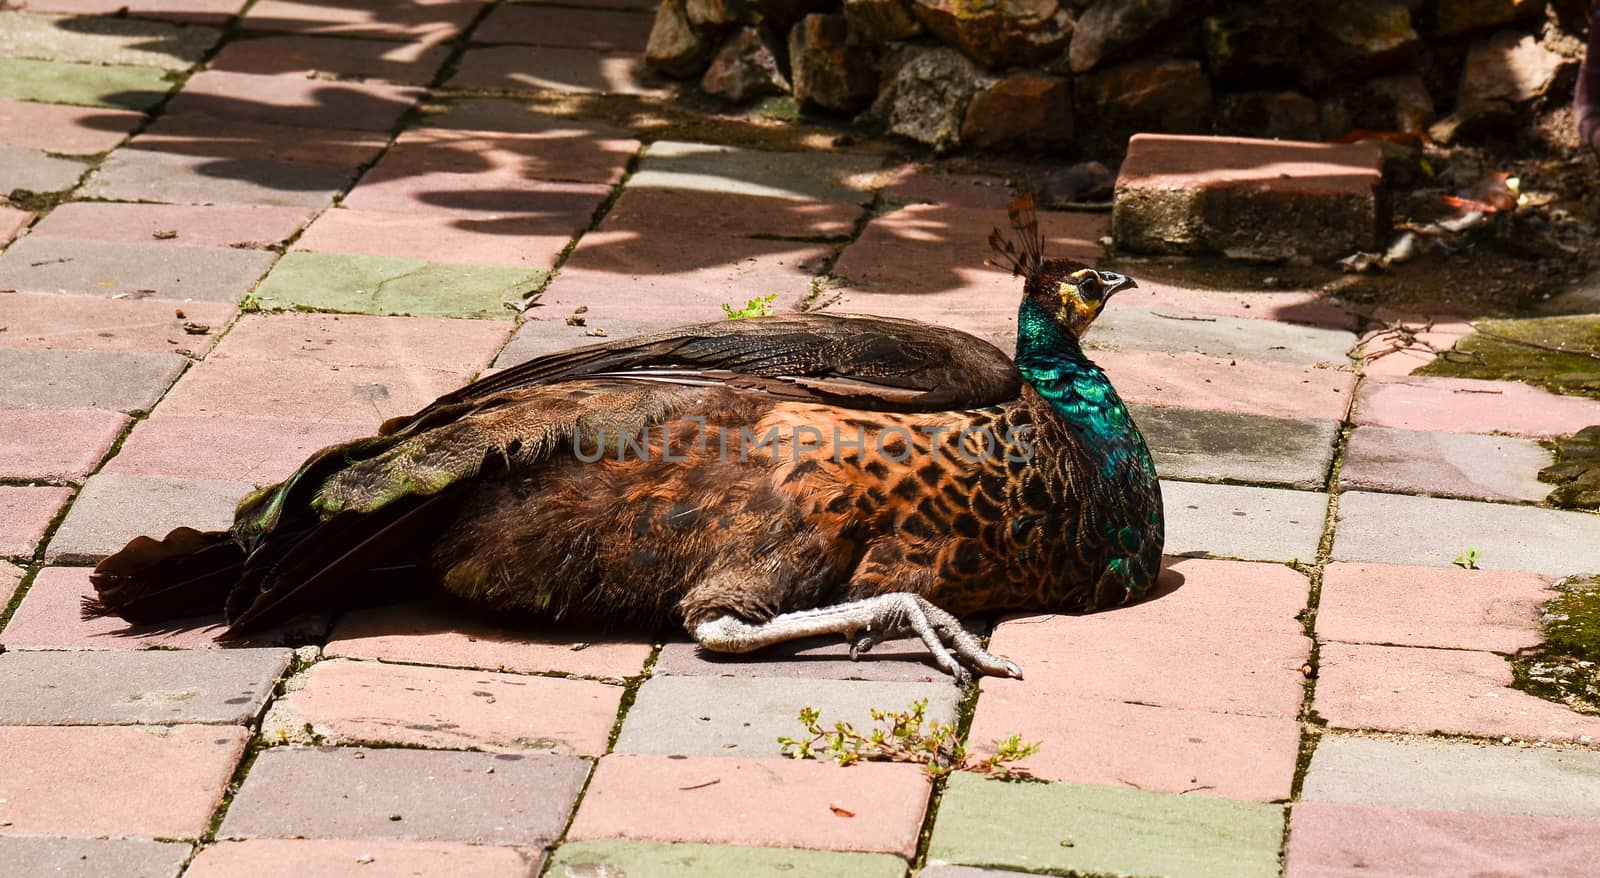 peacock by jengit